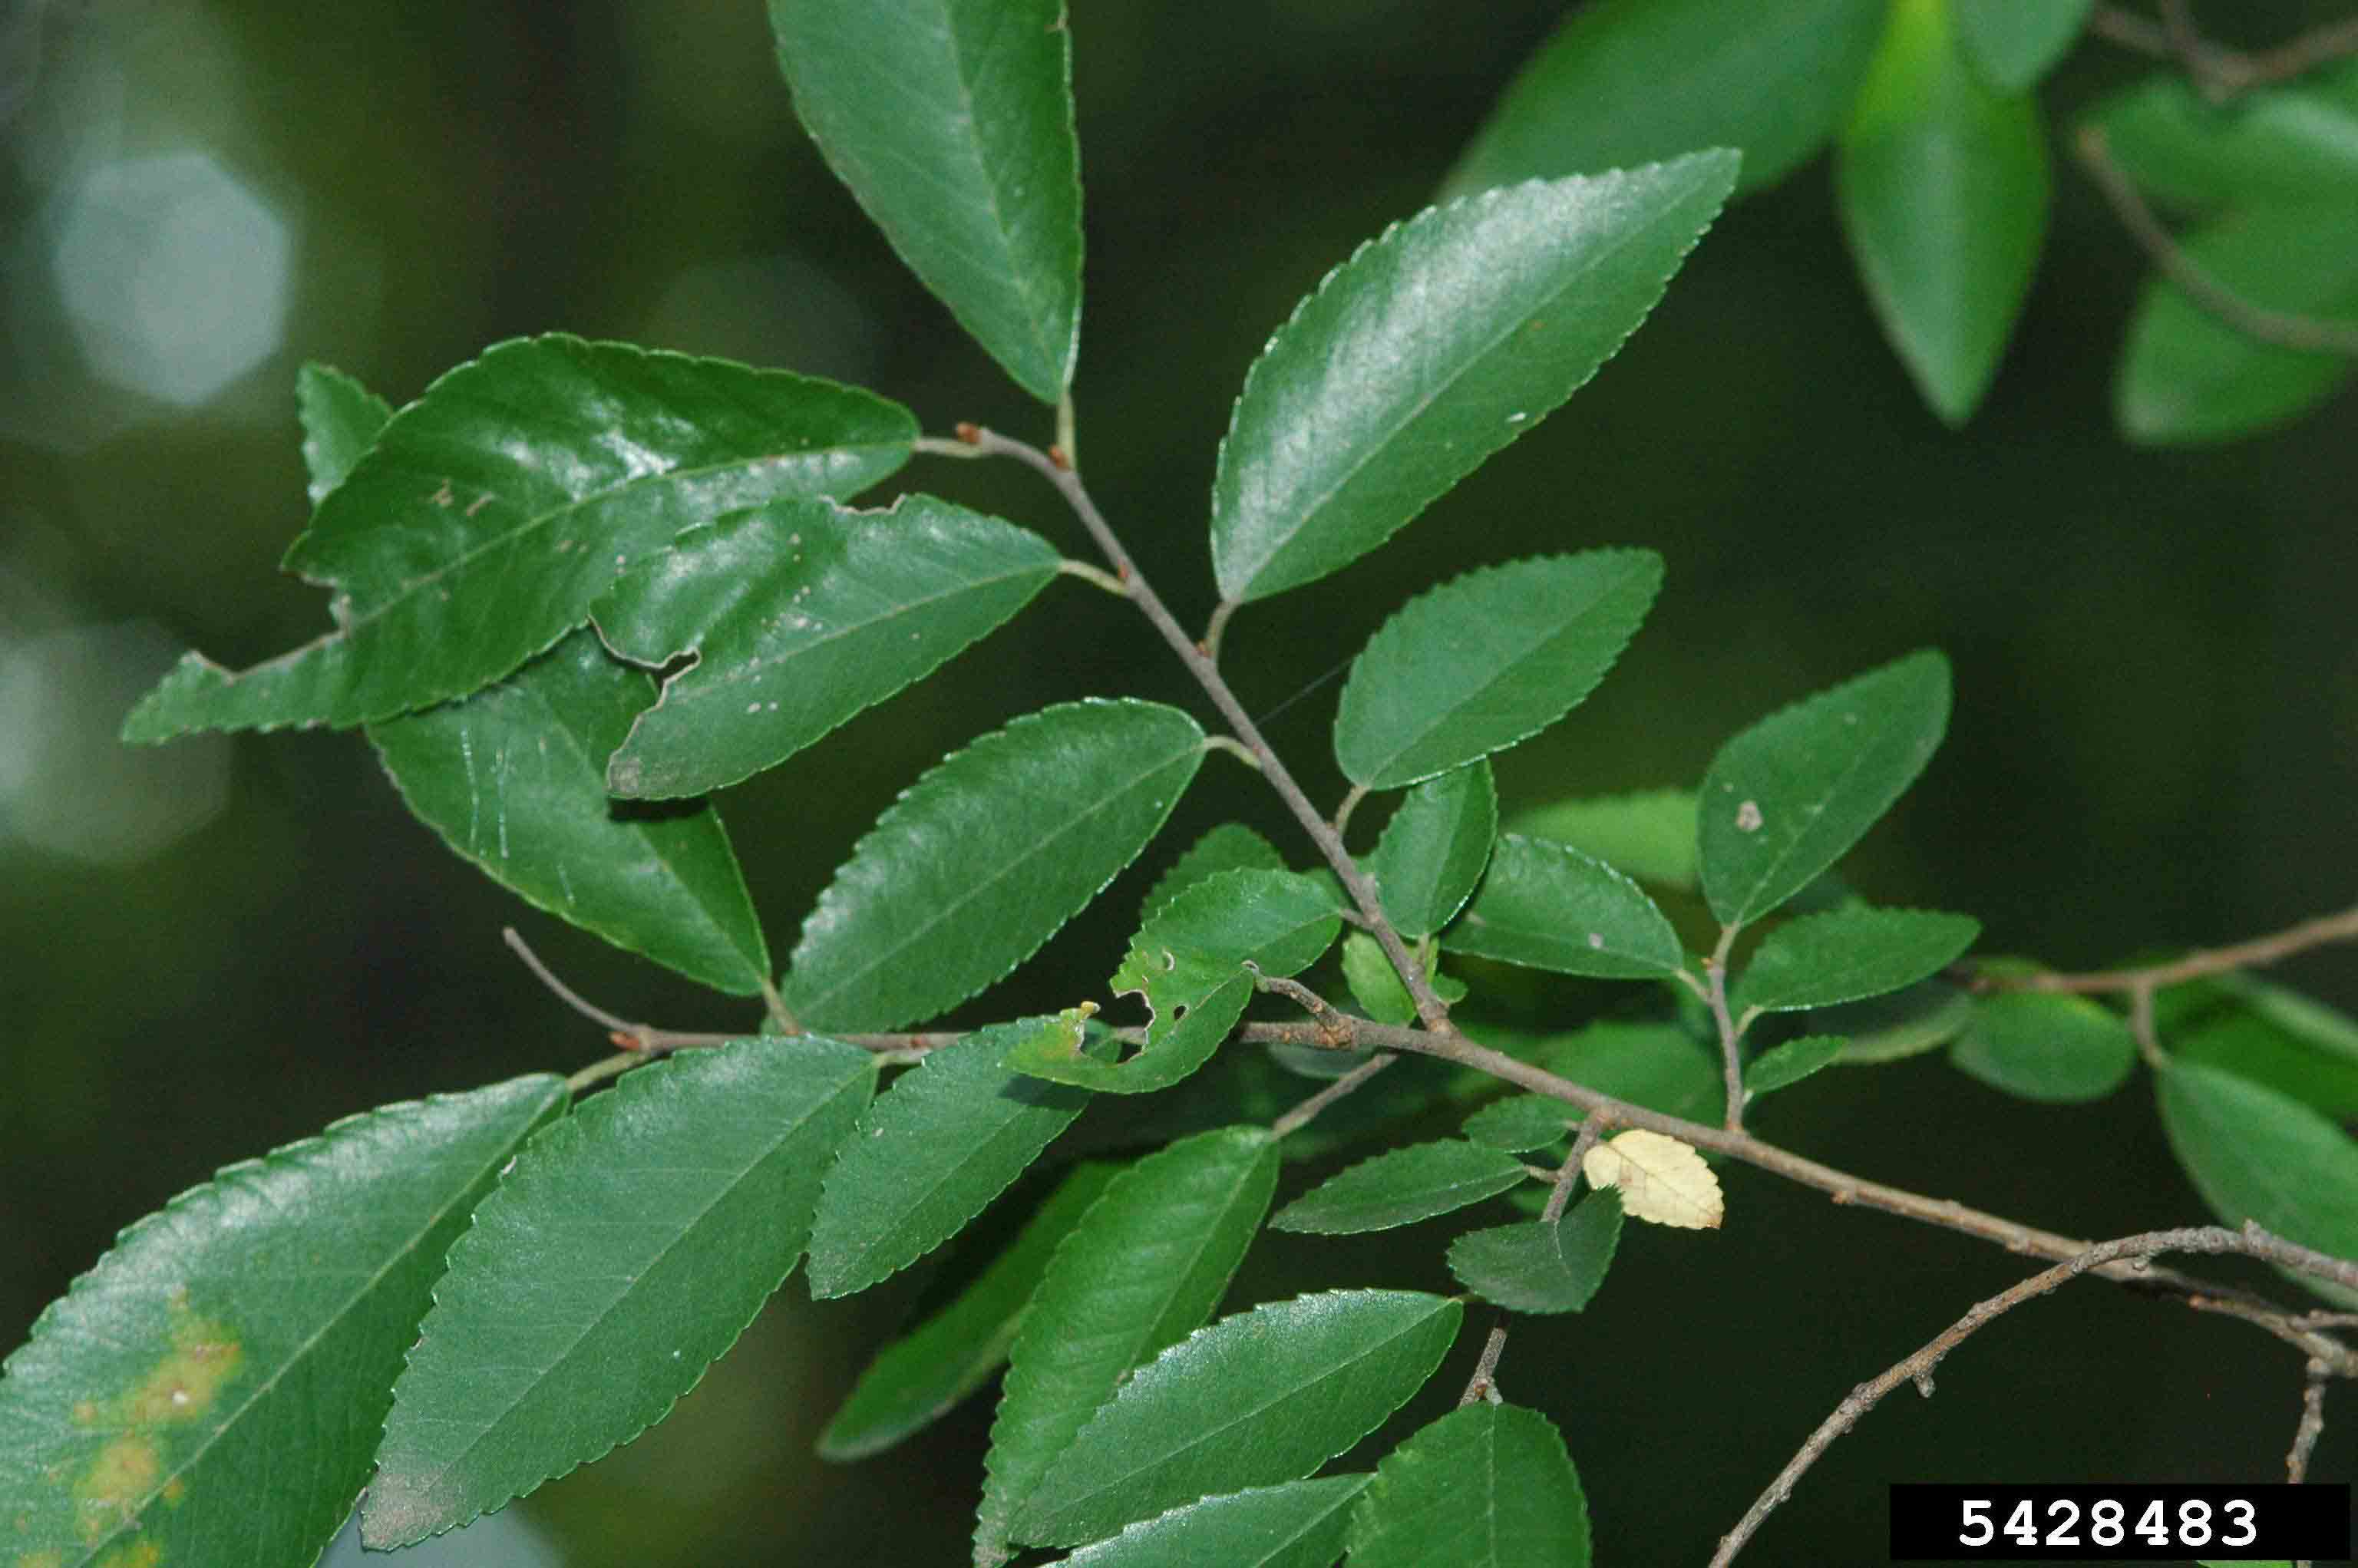 Chinese or lacebark elm stem, showing toothed margins and alternate arrangement of leaves